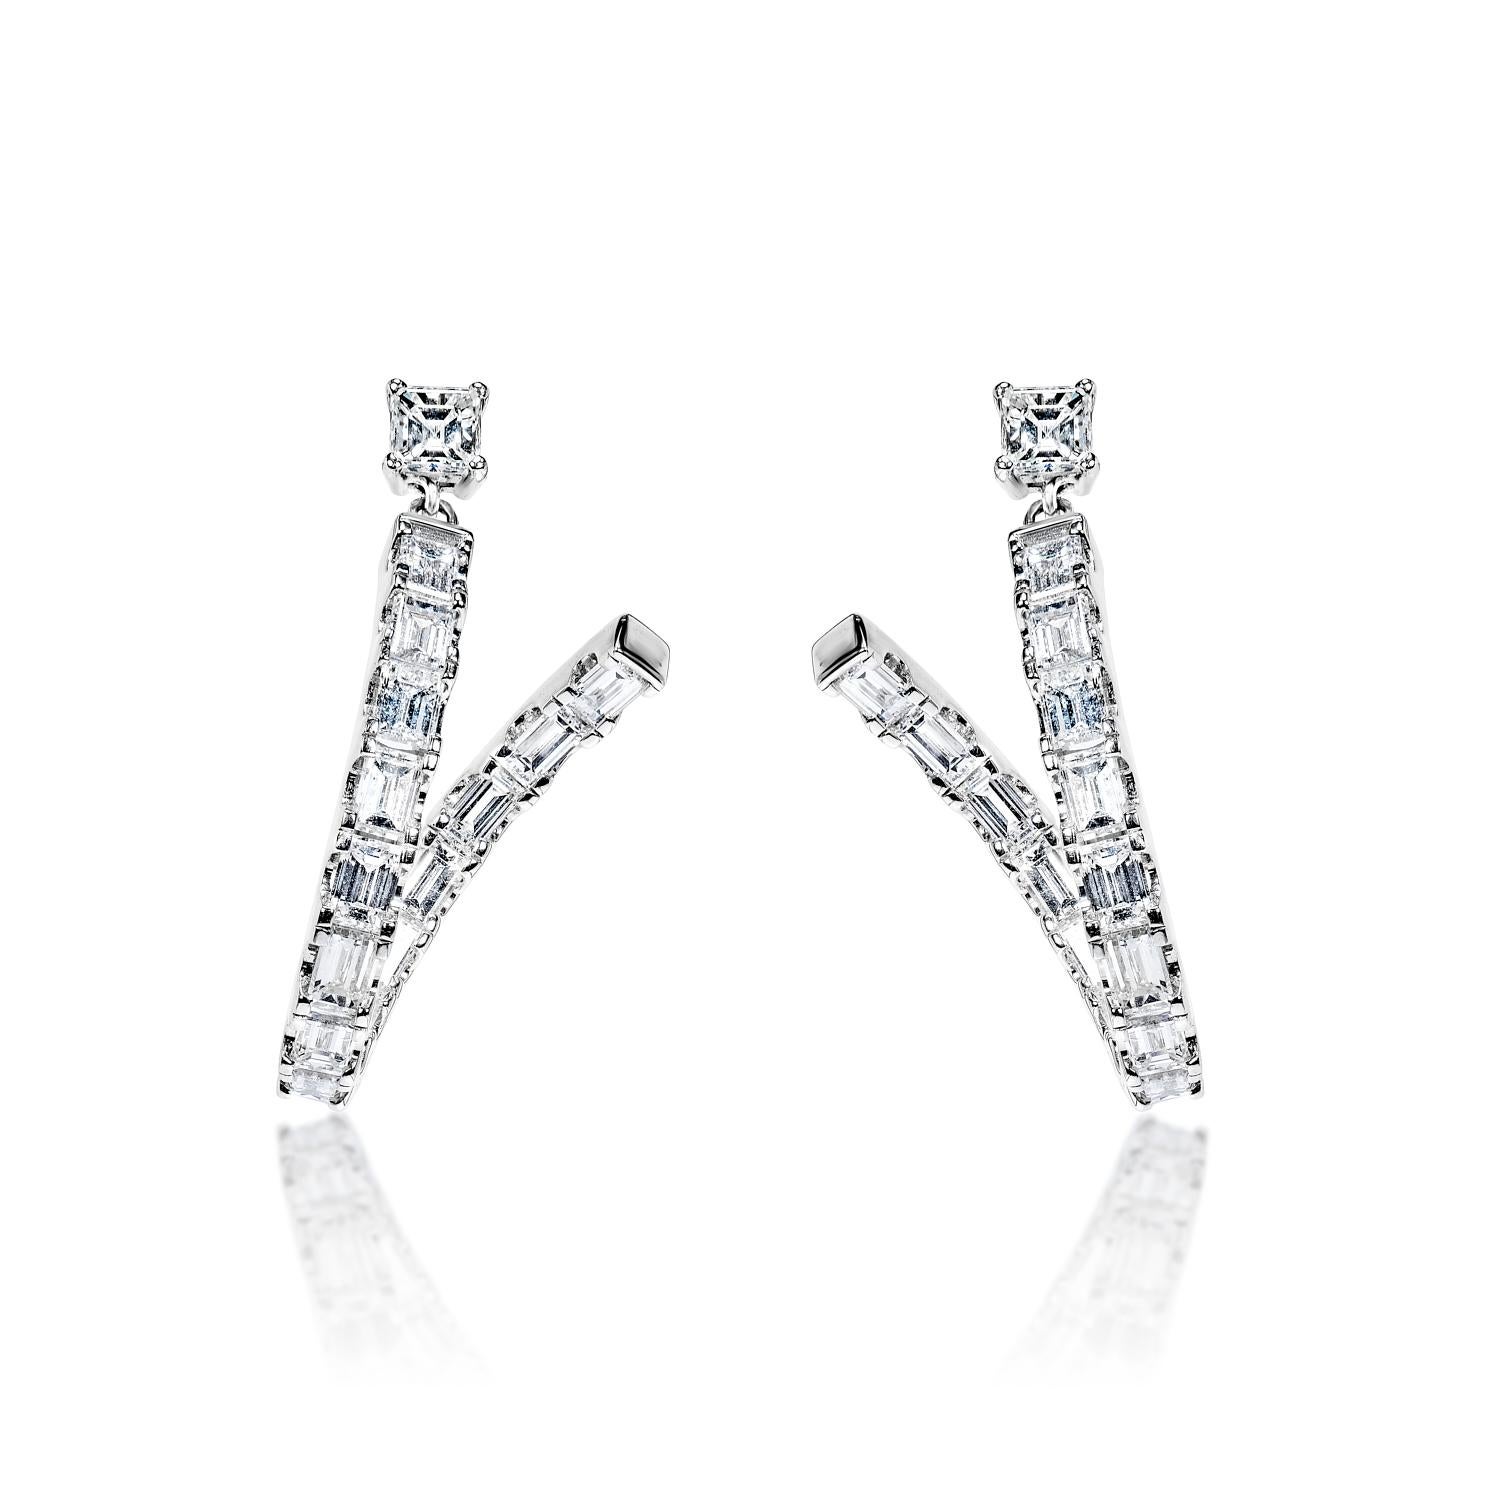 Diamond Dangle Earrings For Ladies:

Main Diamonds:
Carat Weight: 5.73 Carats
Shape: Emerald Cut

Metal: 18 Karat White Gold
Metal Weight: 9.10 grams
Style: Dangle Earrings

Total Carat Weight: 5.73 Carats